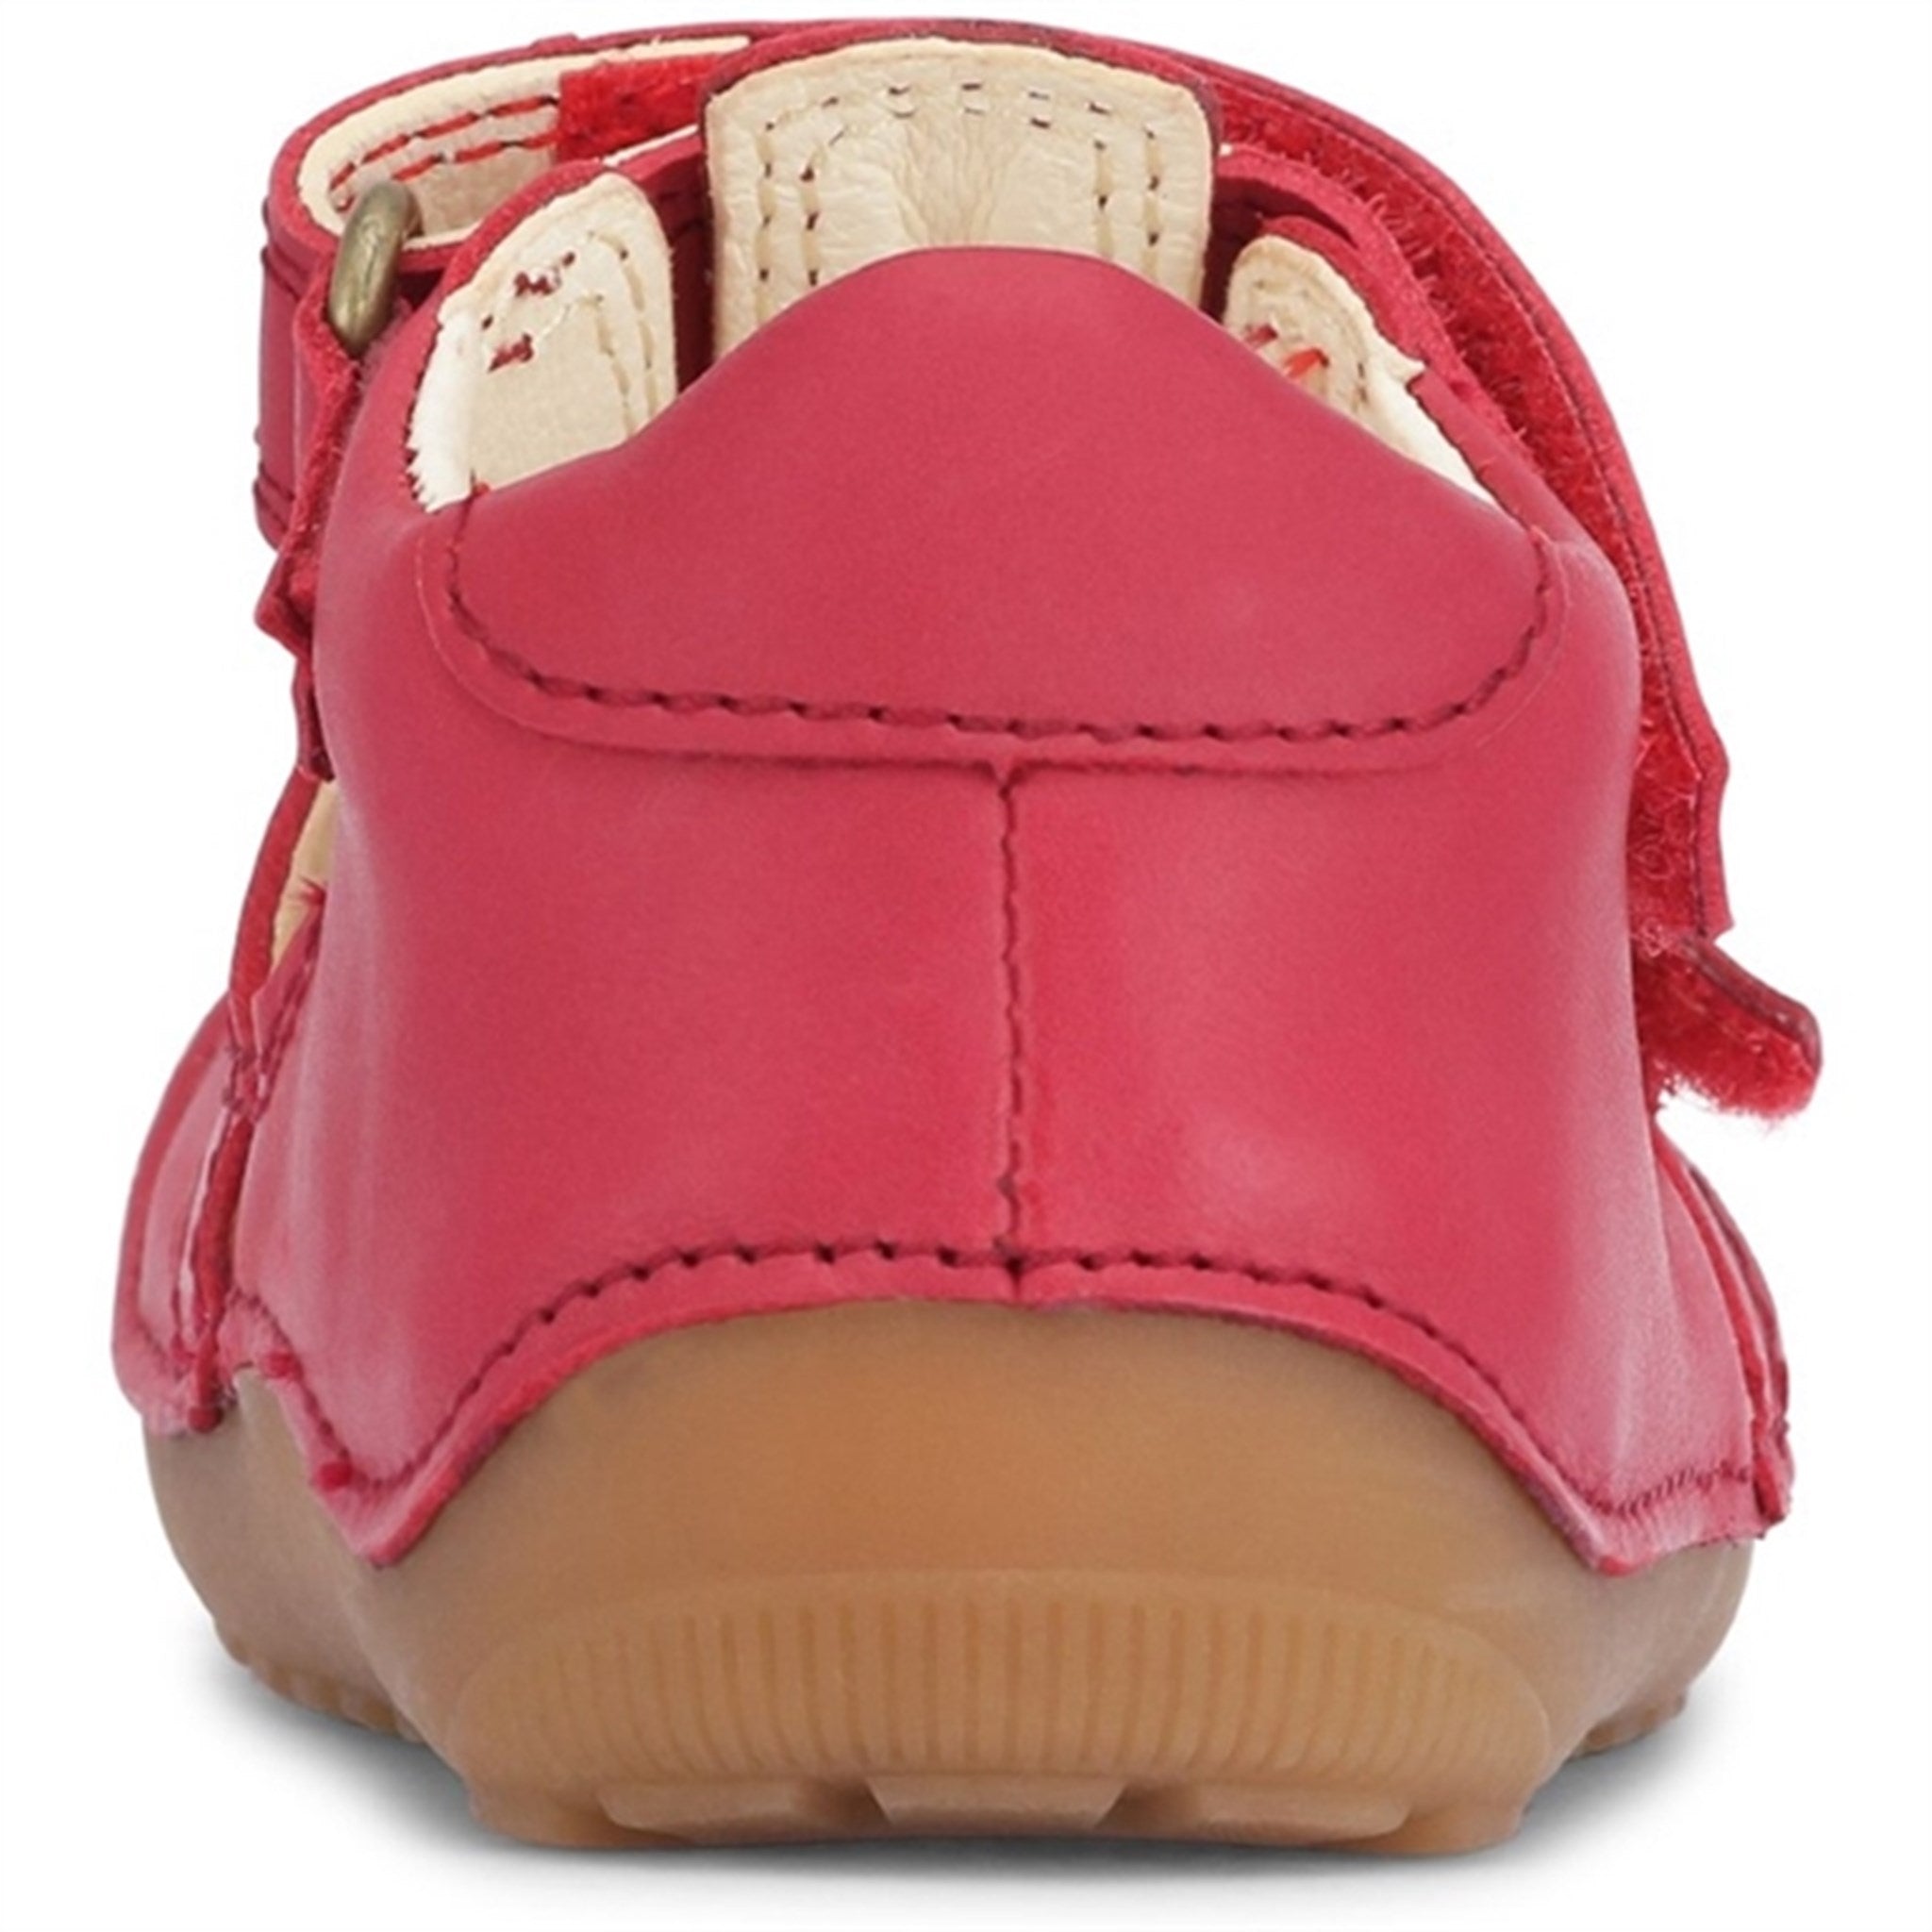 Bundgaard Petit Summer Sandal Red WS 3